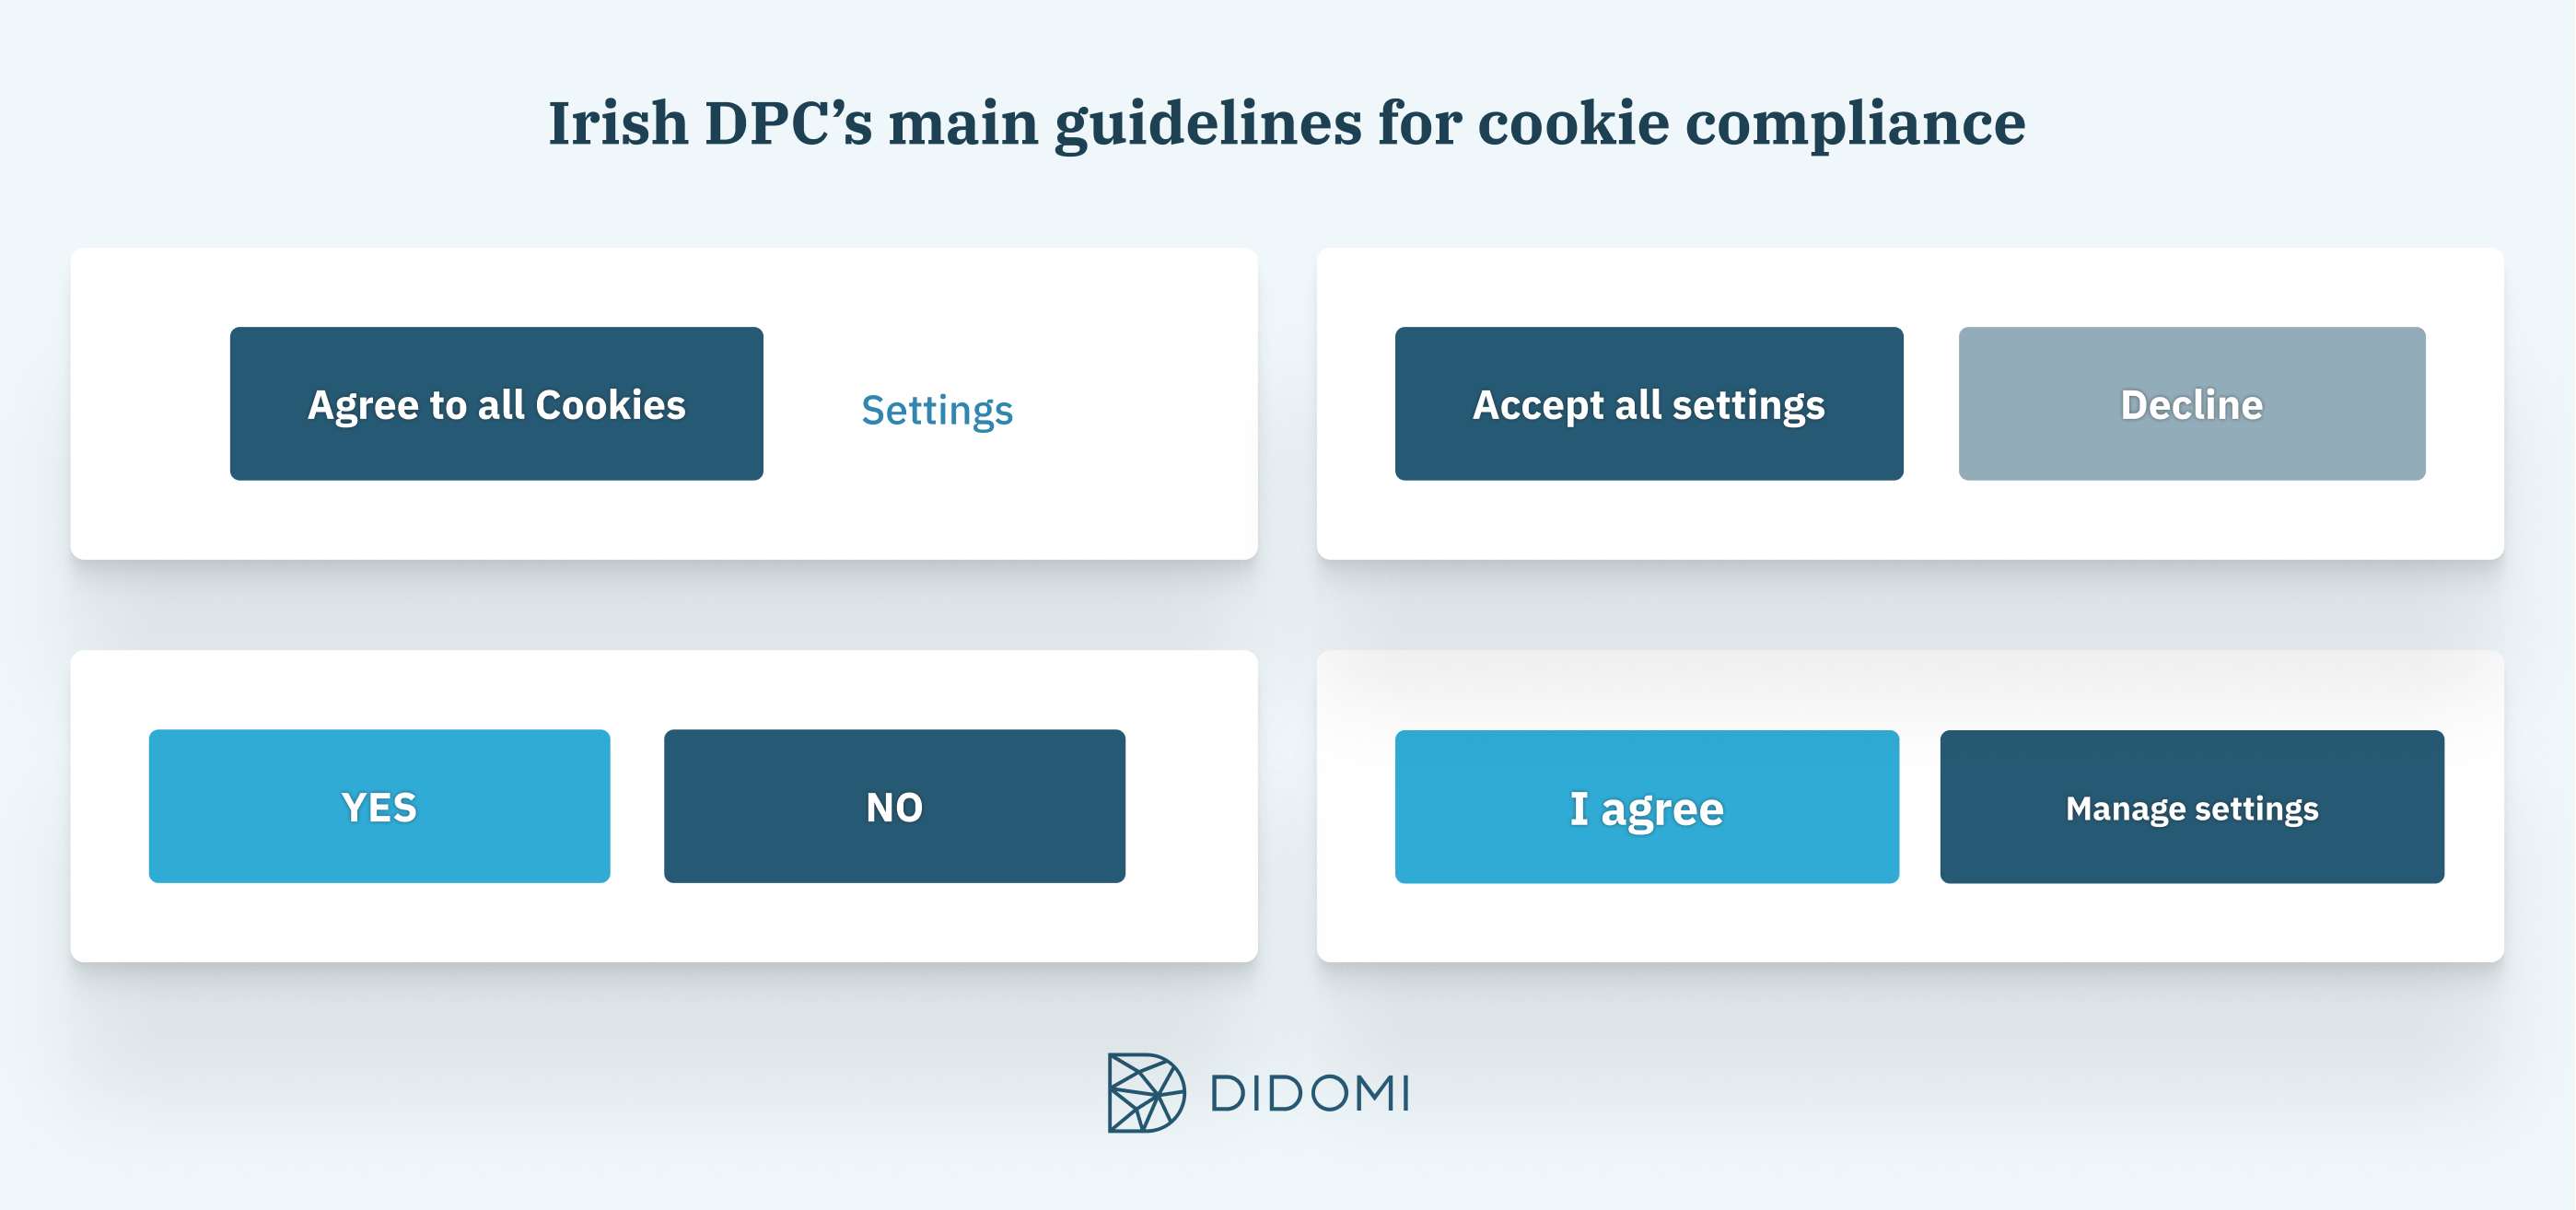 didomi-irish-dpc-guidelines-cookie-compliance